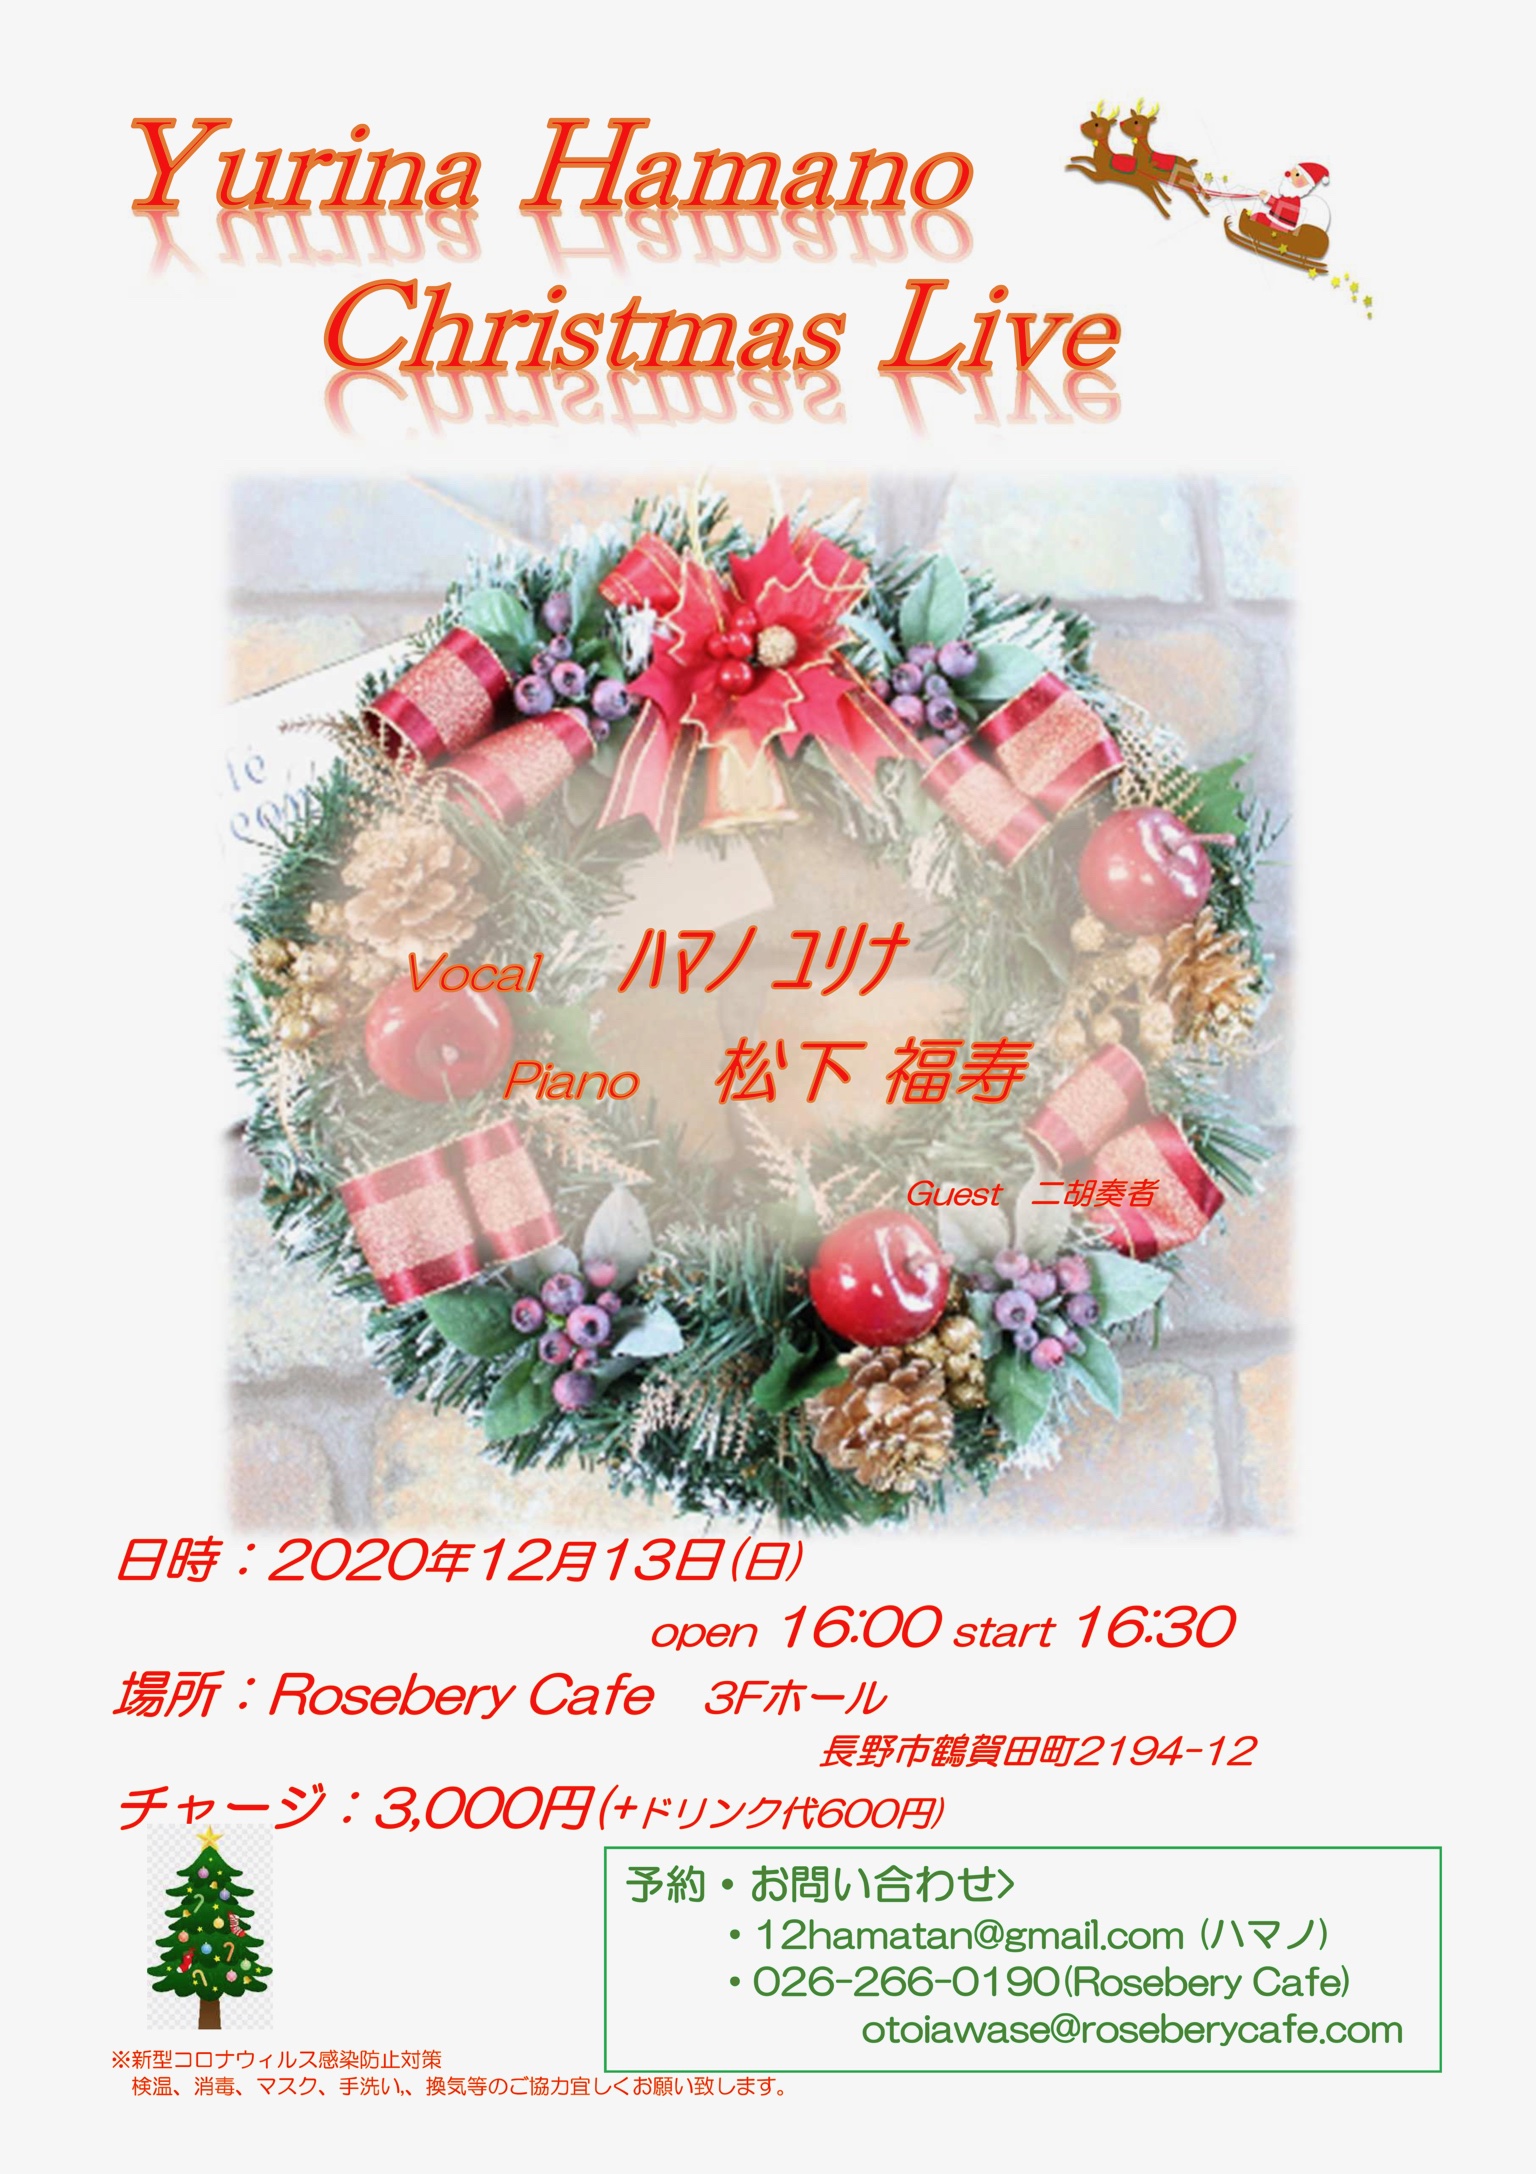 Yurina Hamano Christmas Live